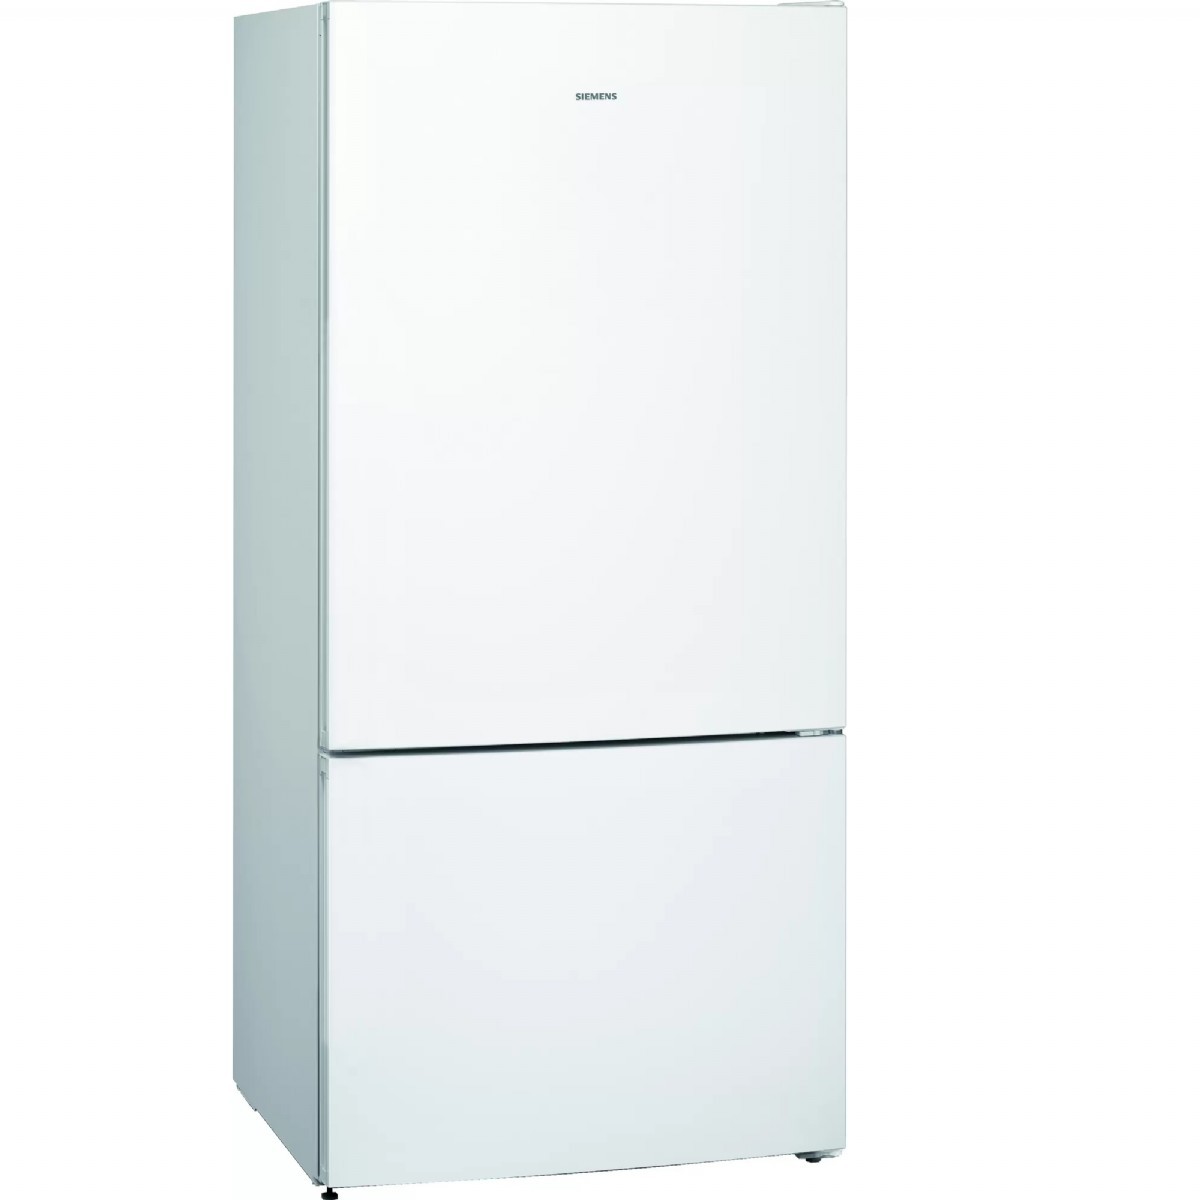 Buzdolabı | Siemens KG86NDWF0N Kombi No-Frost Buzdolabı | KG86NDWF0N | KG86NDWF0N, kg86ndwf0n, Siemens KG86NDWF0N Kombi No-Frost Buzdolabı, Siemens KG86NDWF0N Buzdolabı | 